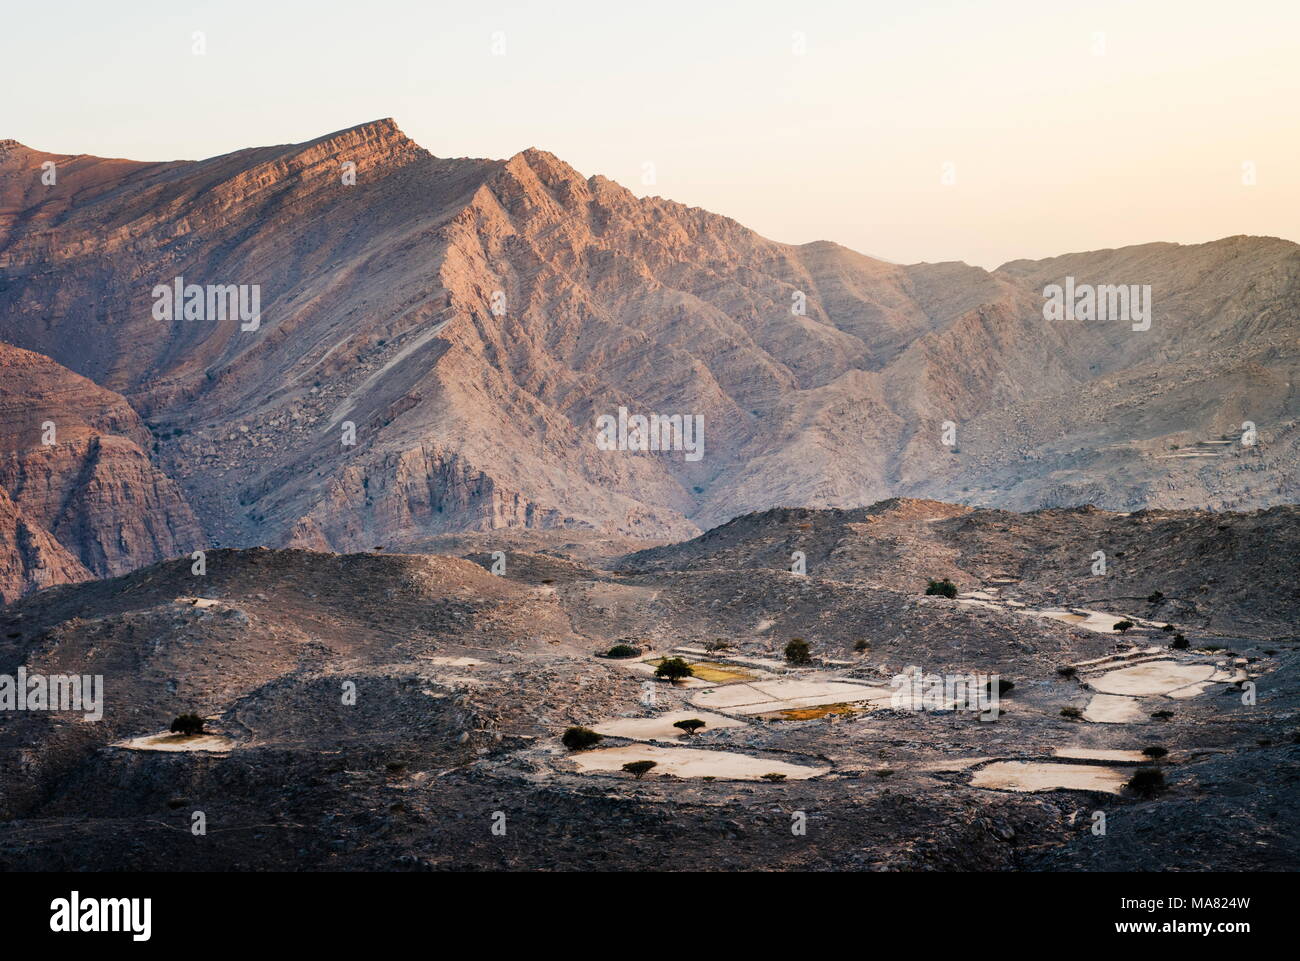 Stunning desert mountain scenery of Jabal Jais in the United Arab Emirates Stock Photo